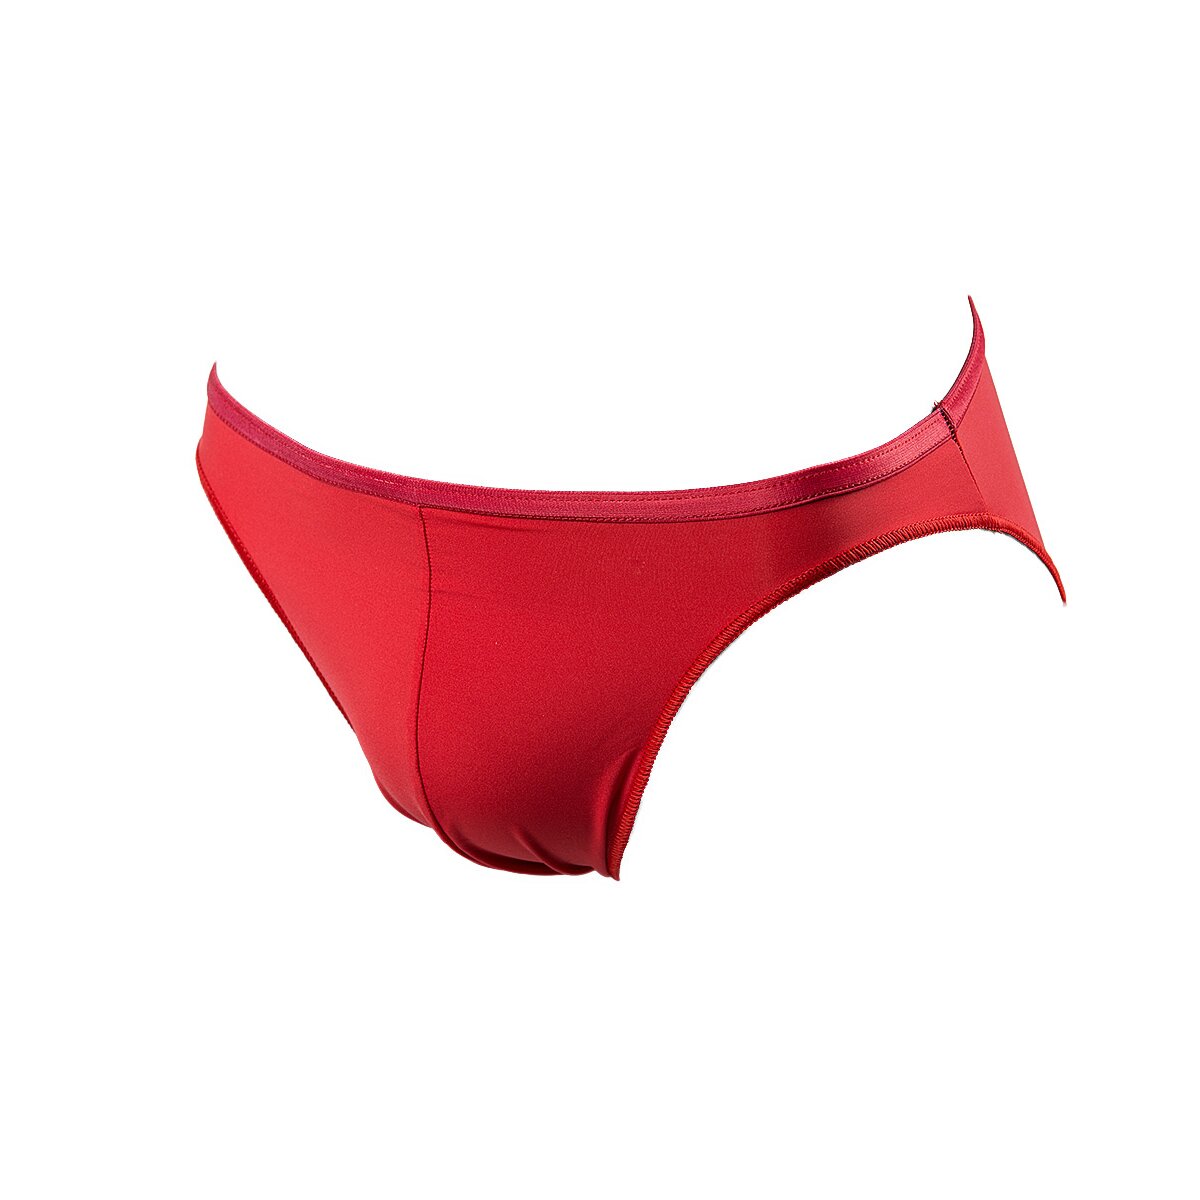 HOM Herren Micro Briefs Plumes Herrenslip Underwear - Rot, 26,95 €